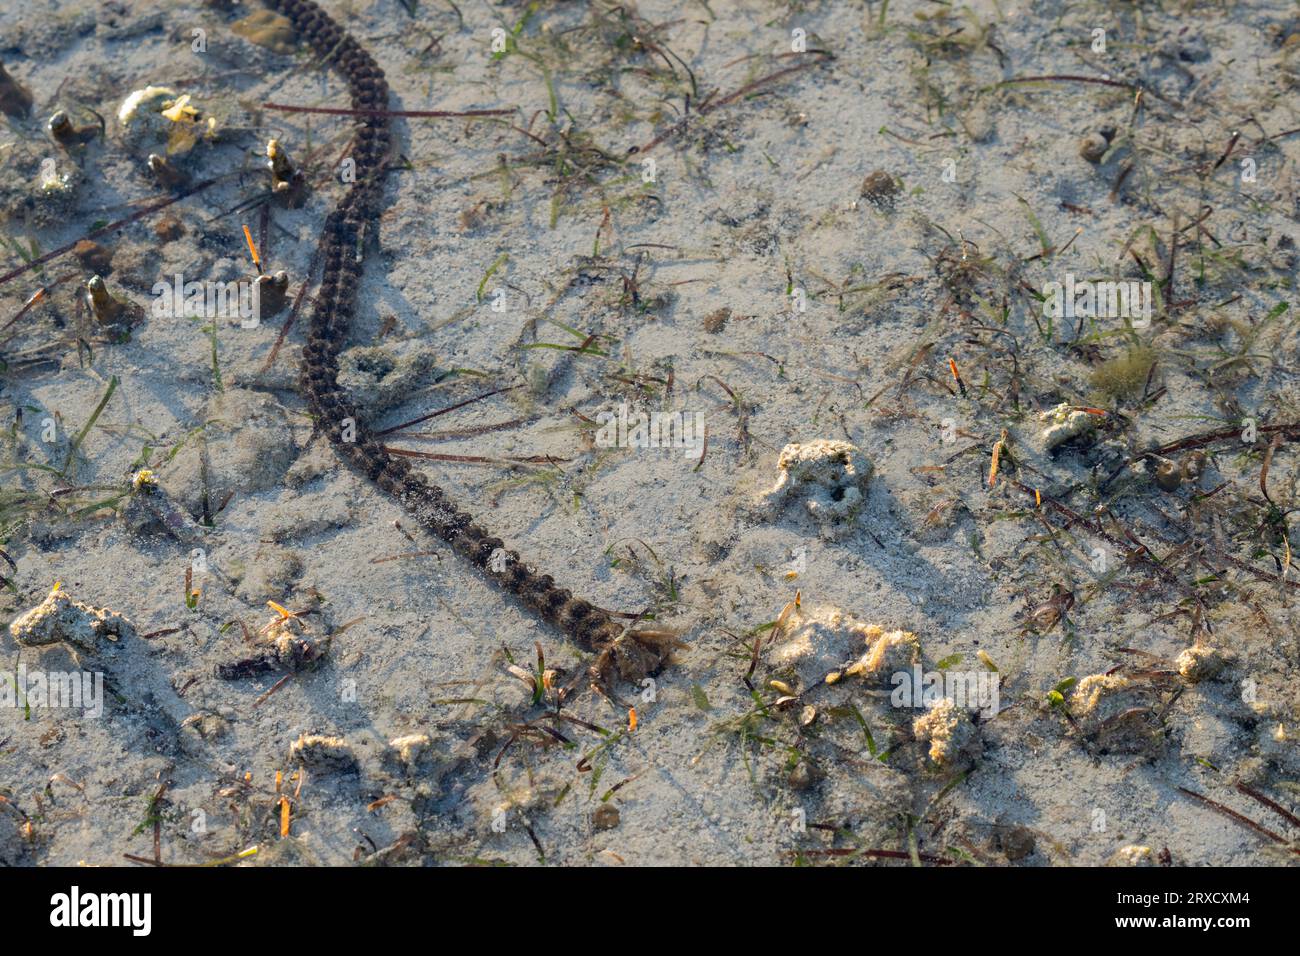 Long Sea worm or sea cucumber in shallow water of Fiji Stock Photo